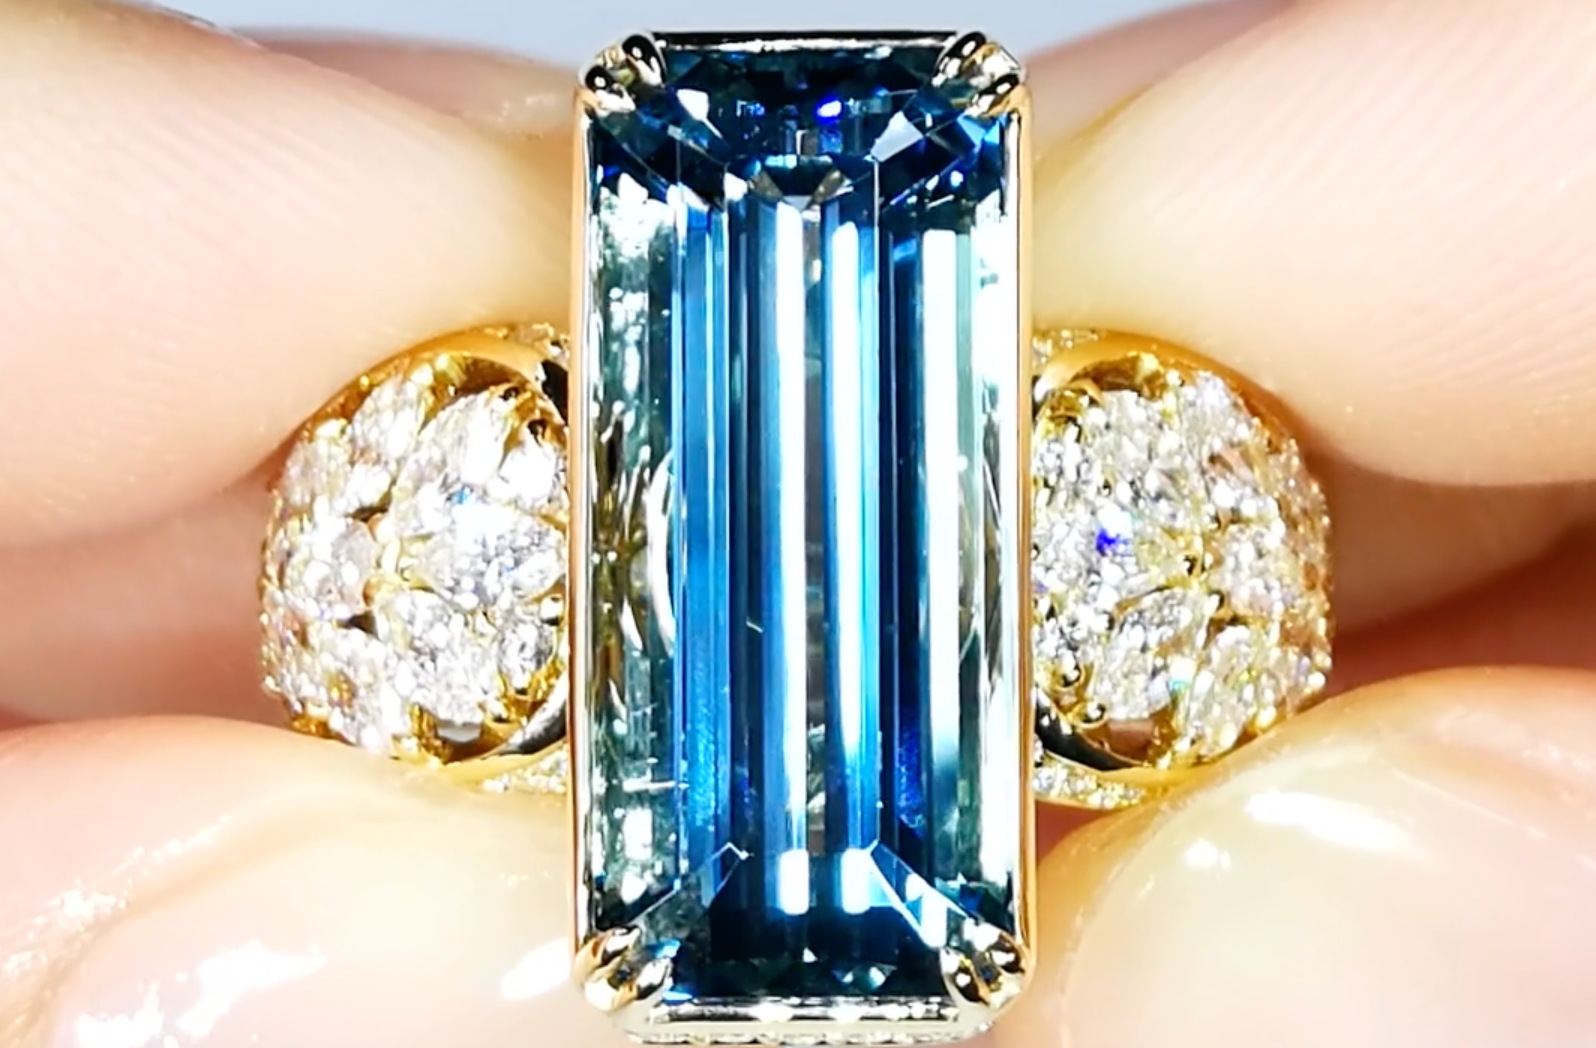 9.11ct Santa Maria Aquamarine Ring with D Flawless Diamonds set in 18K Yellow Gold